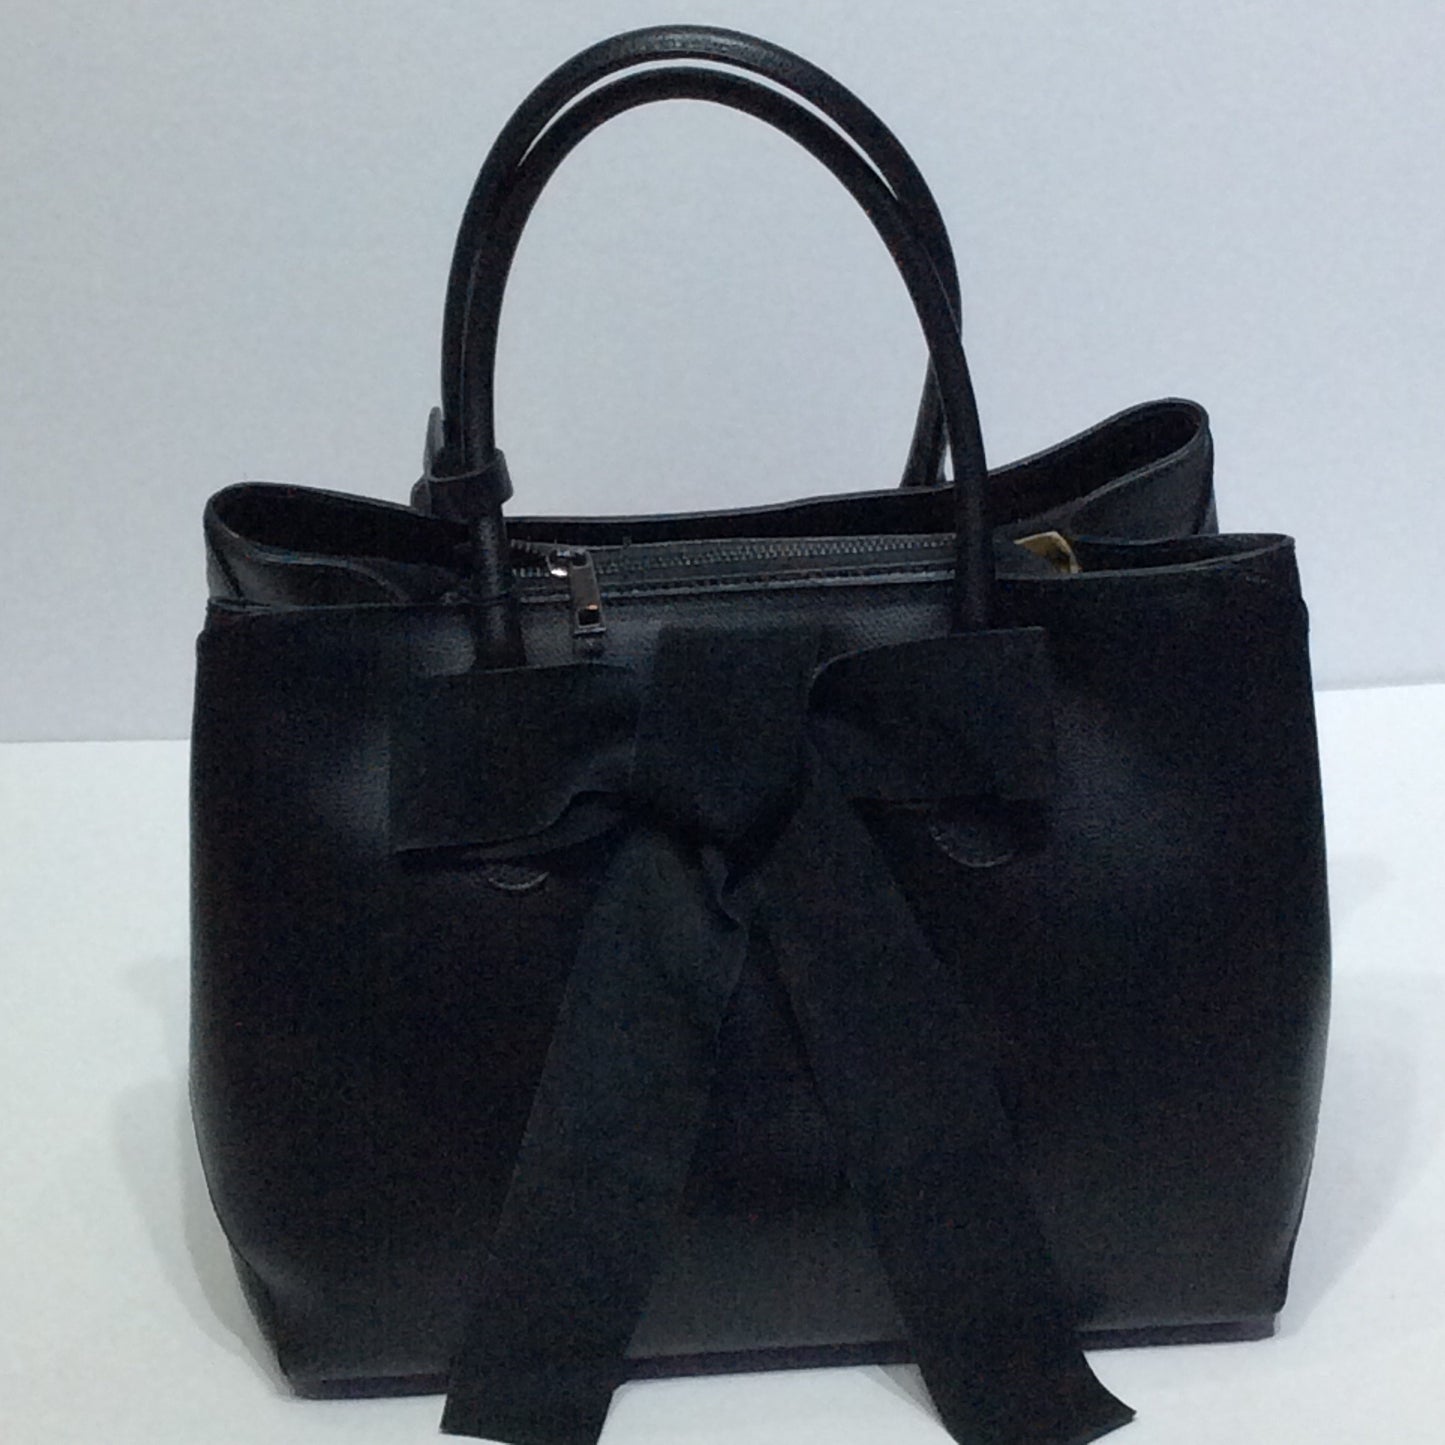 Oversized Italian leather handbag